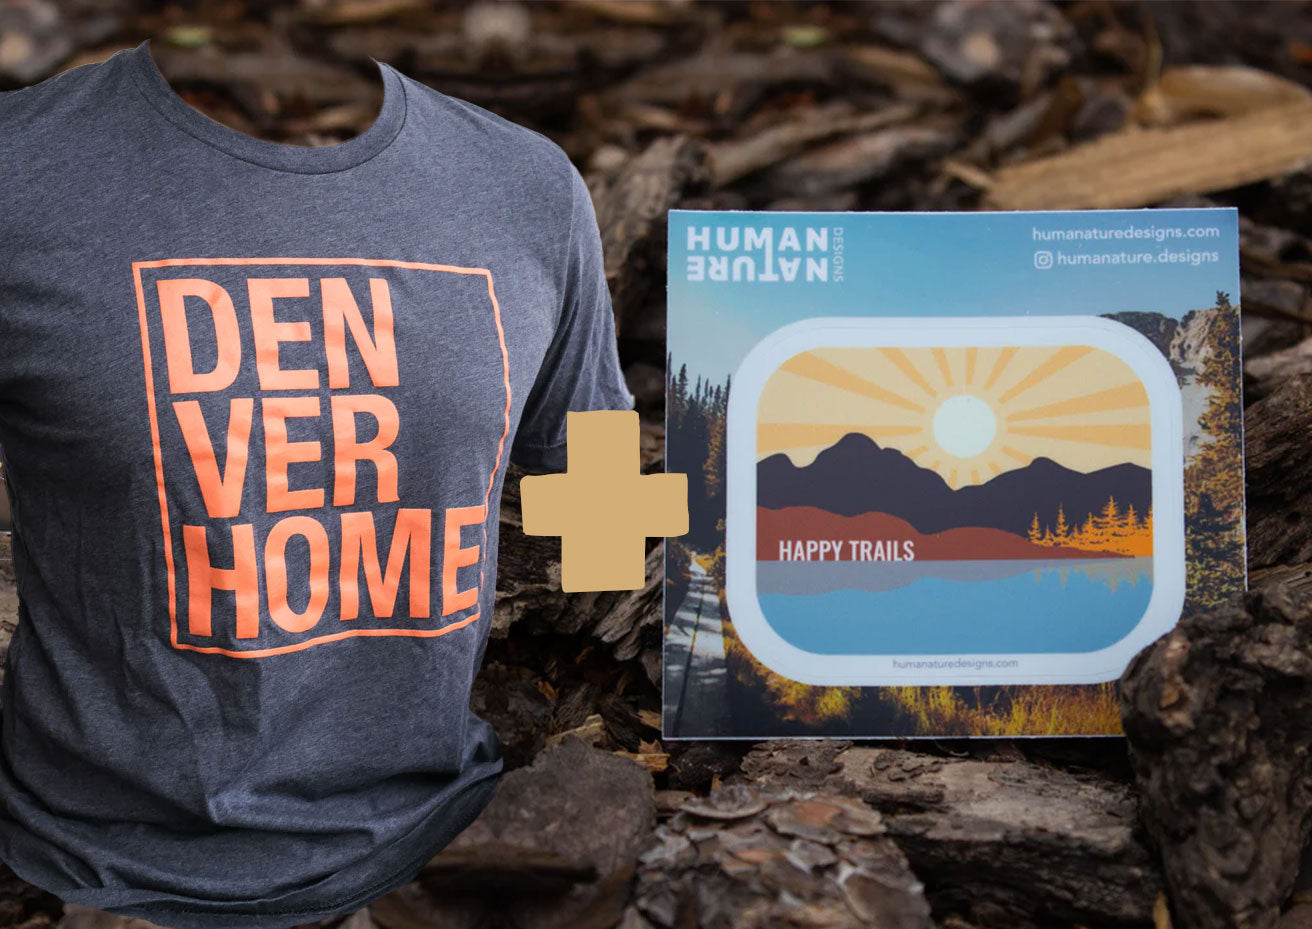 Denver Home Shirt and Human Nature Designs Sticker Cyber Monday Promo